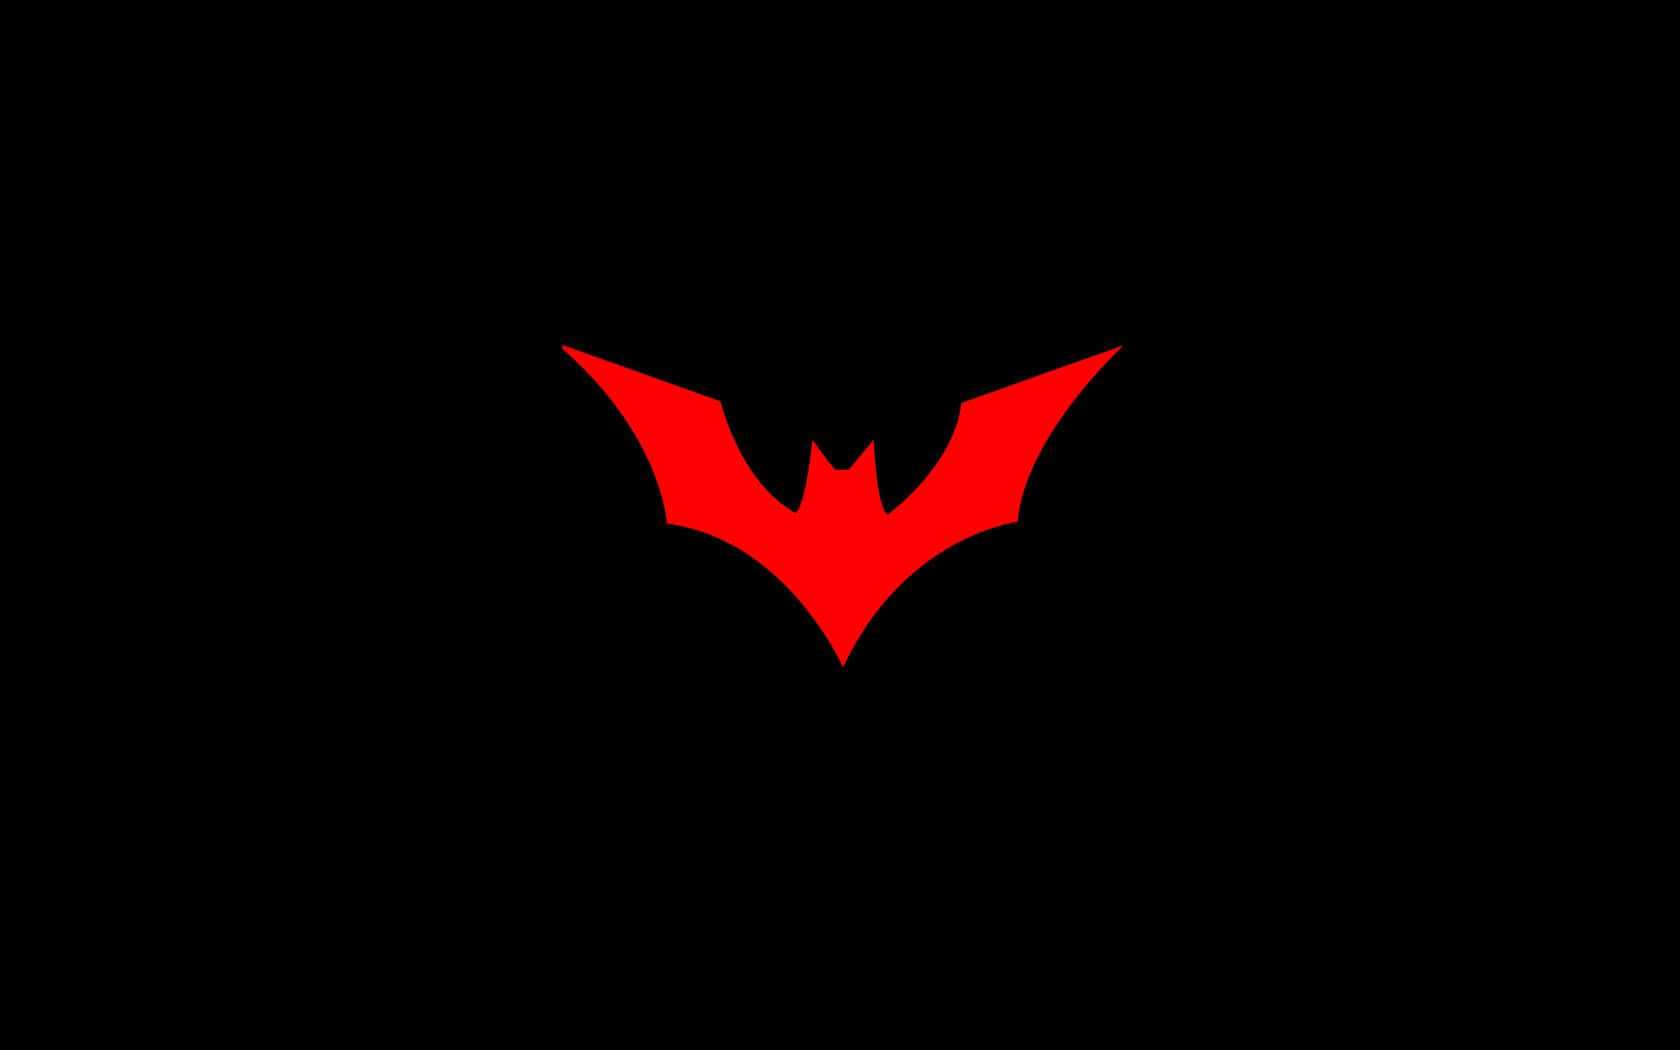 Free Red Batman Logo Wallpaper Downloads, [100+] Red Batman Logo Wallpapers  for FREE 